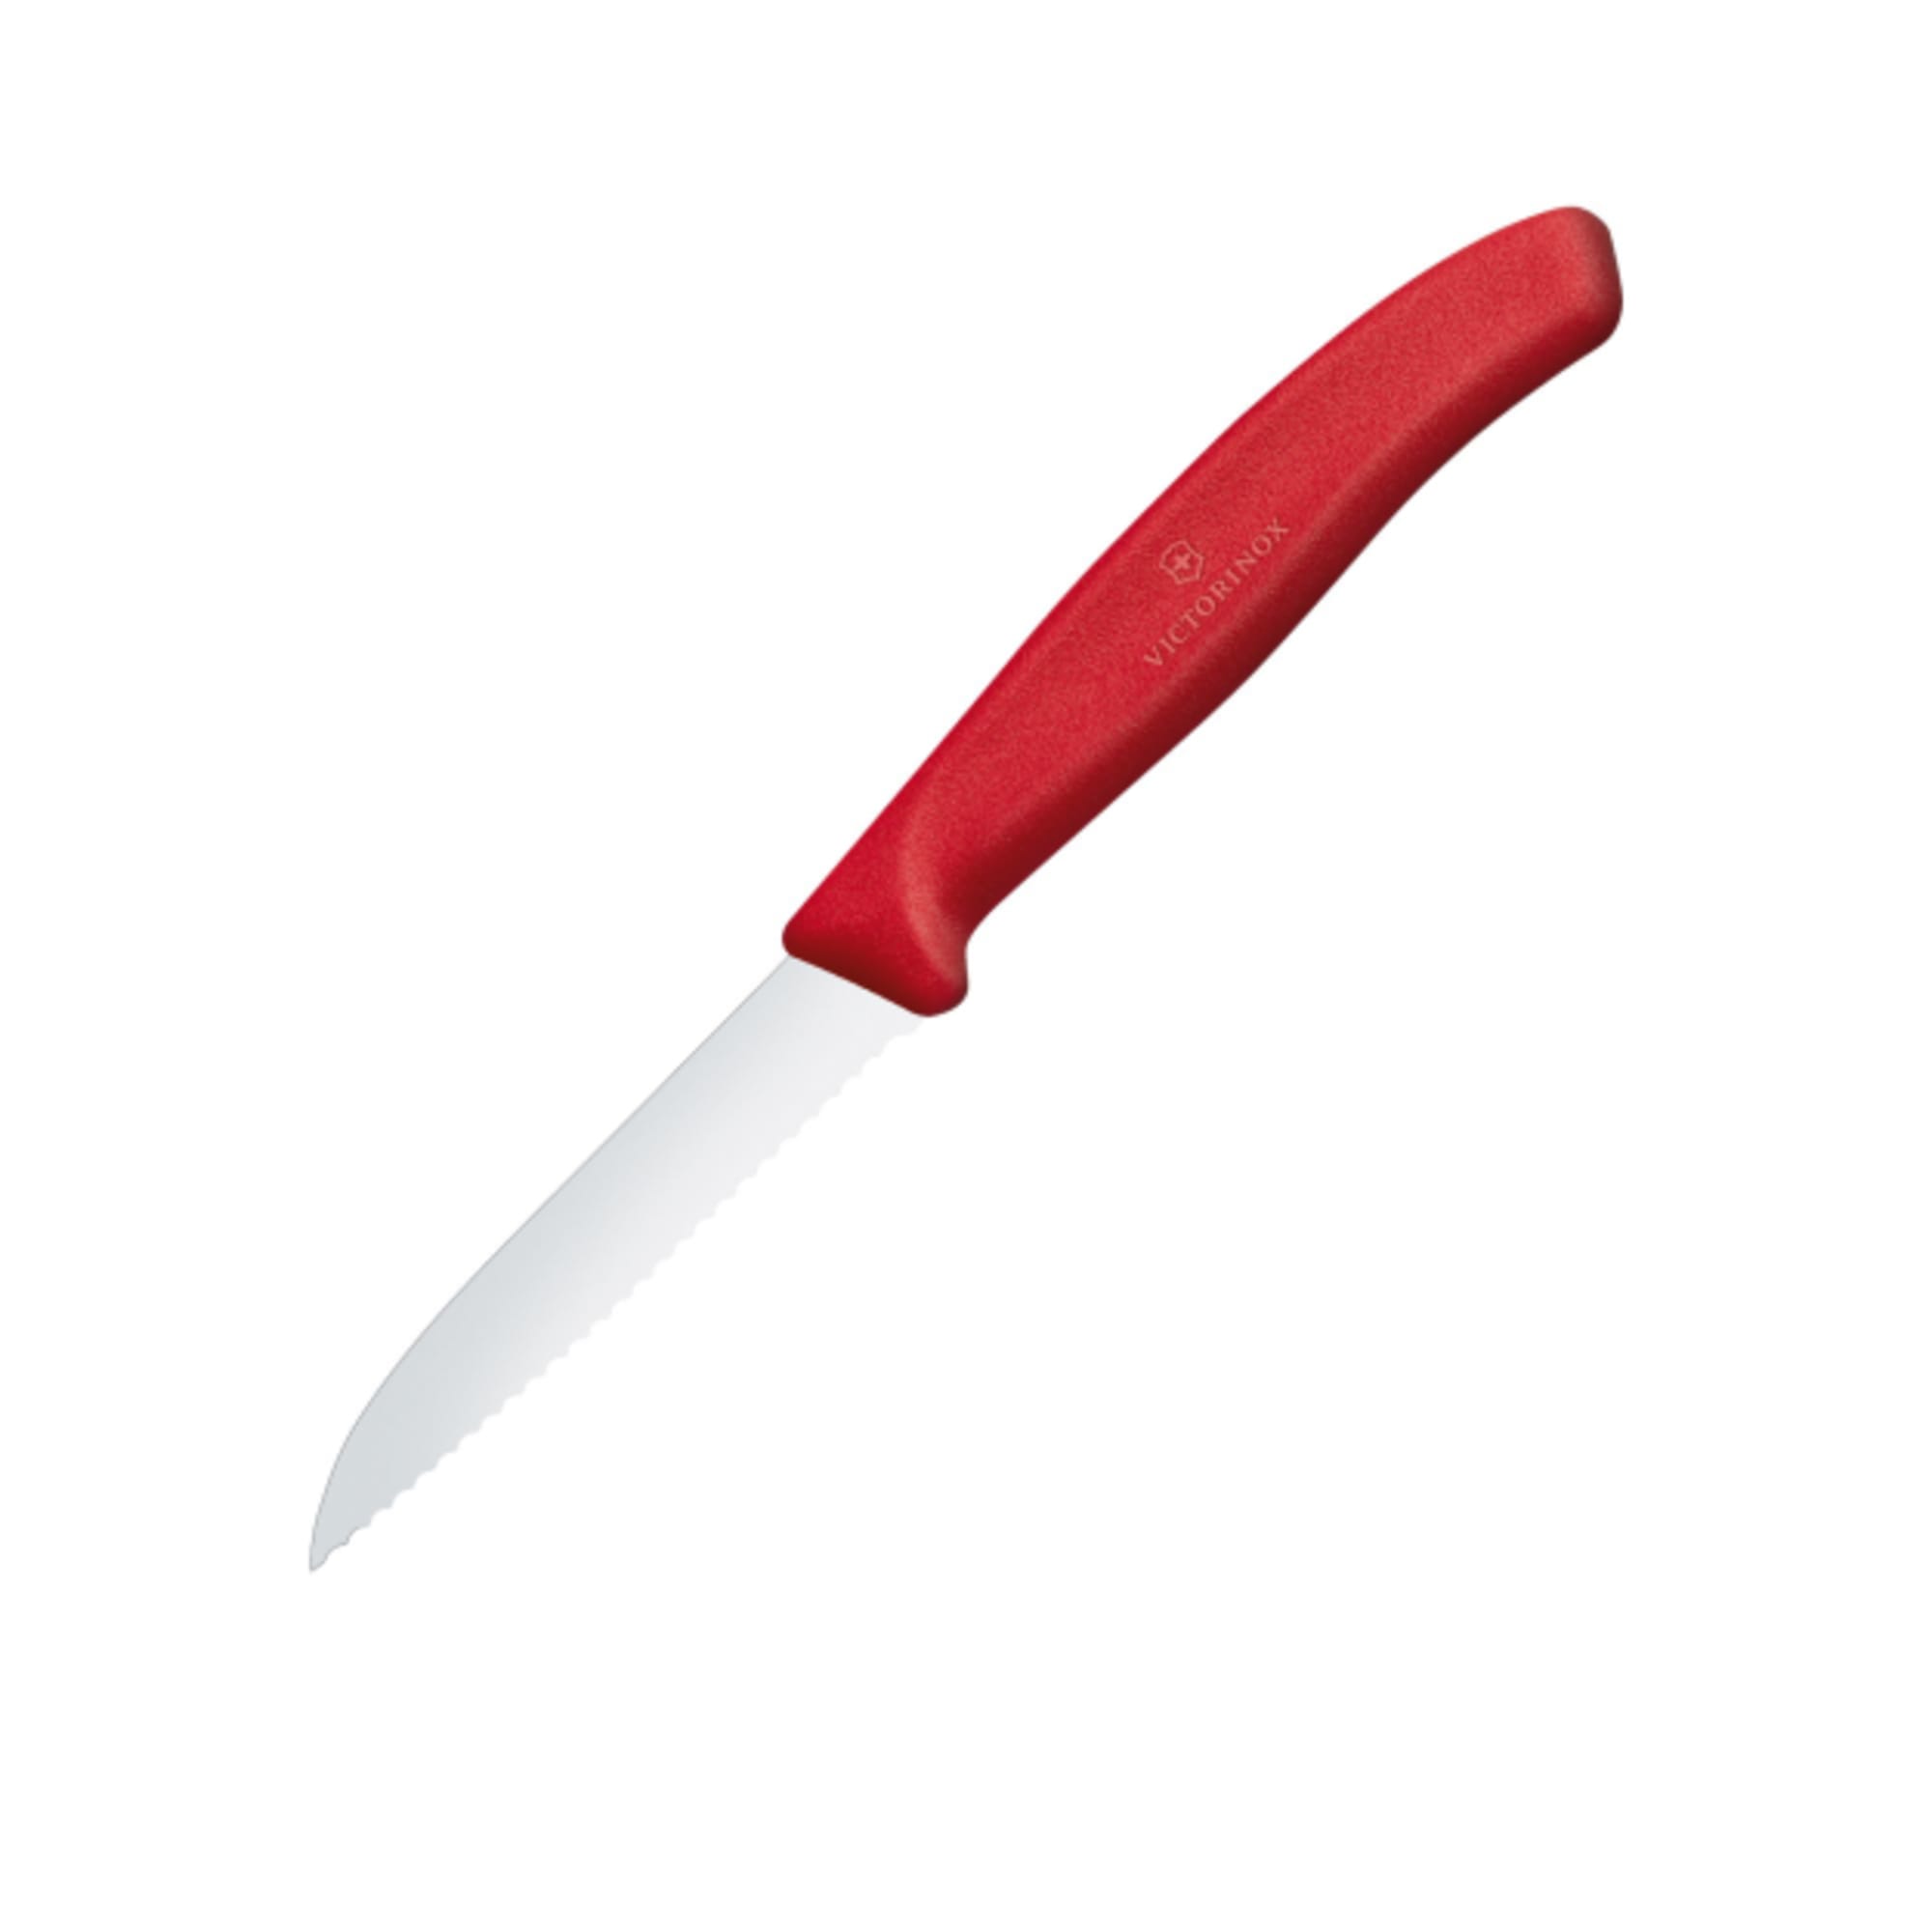 Victorinox paring knife 8 cm Serrated blade